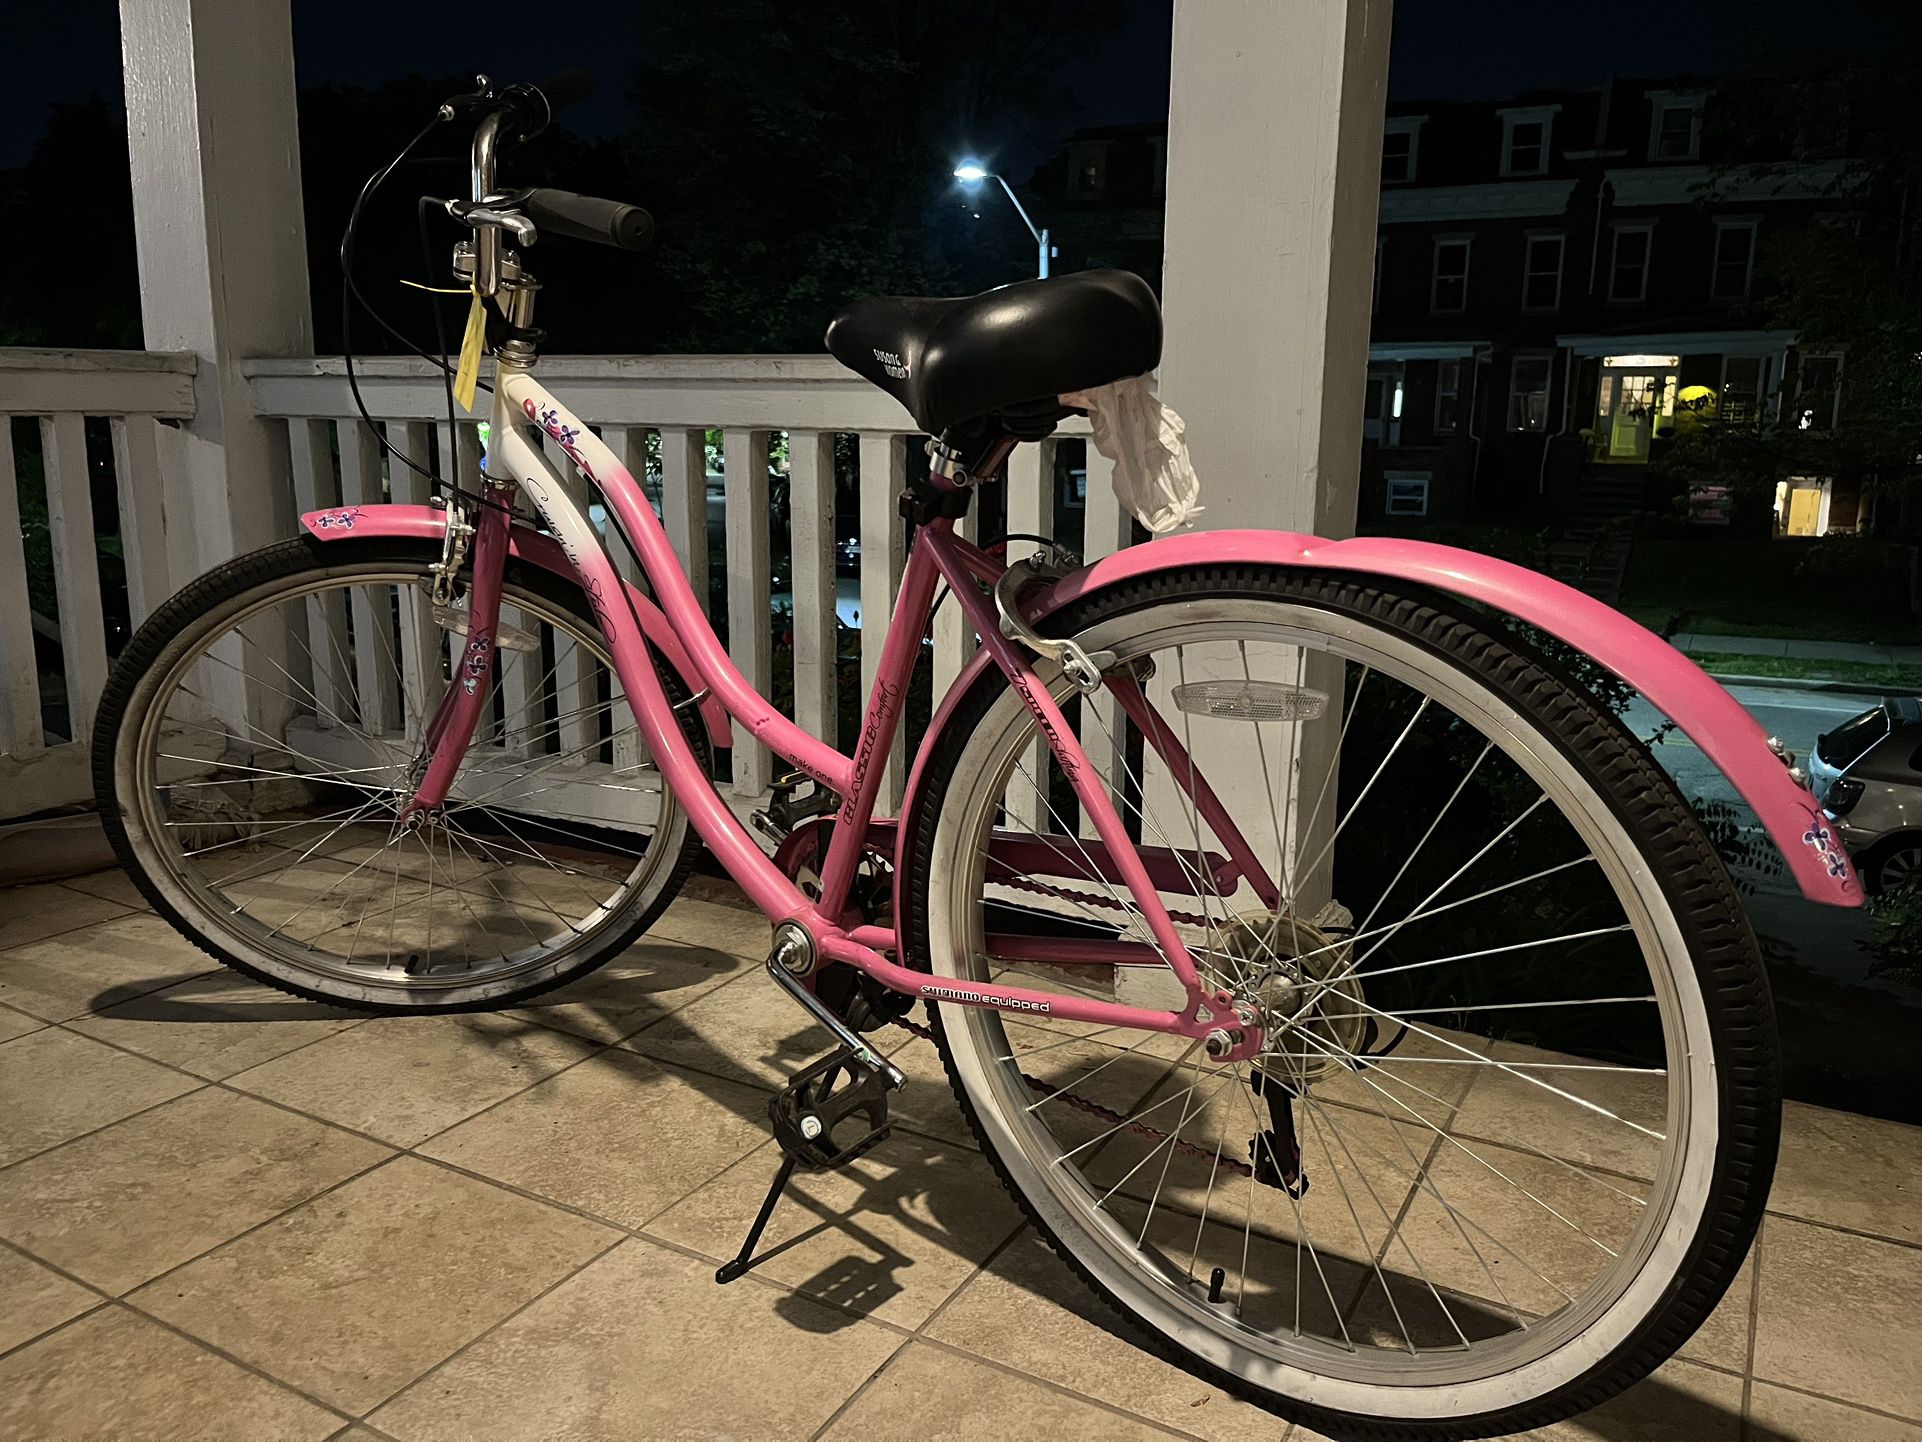 Susan G Komen 26" Multi-Speed Cruiser Women's Bike, Pink, with a pump and a lock 